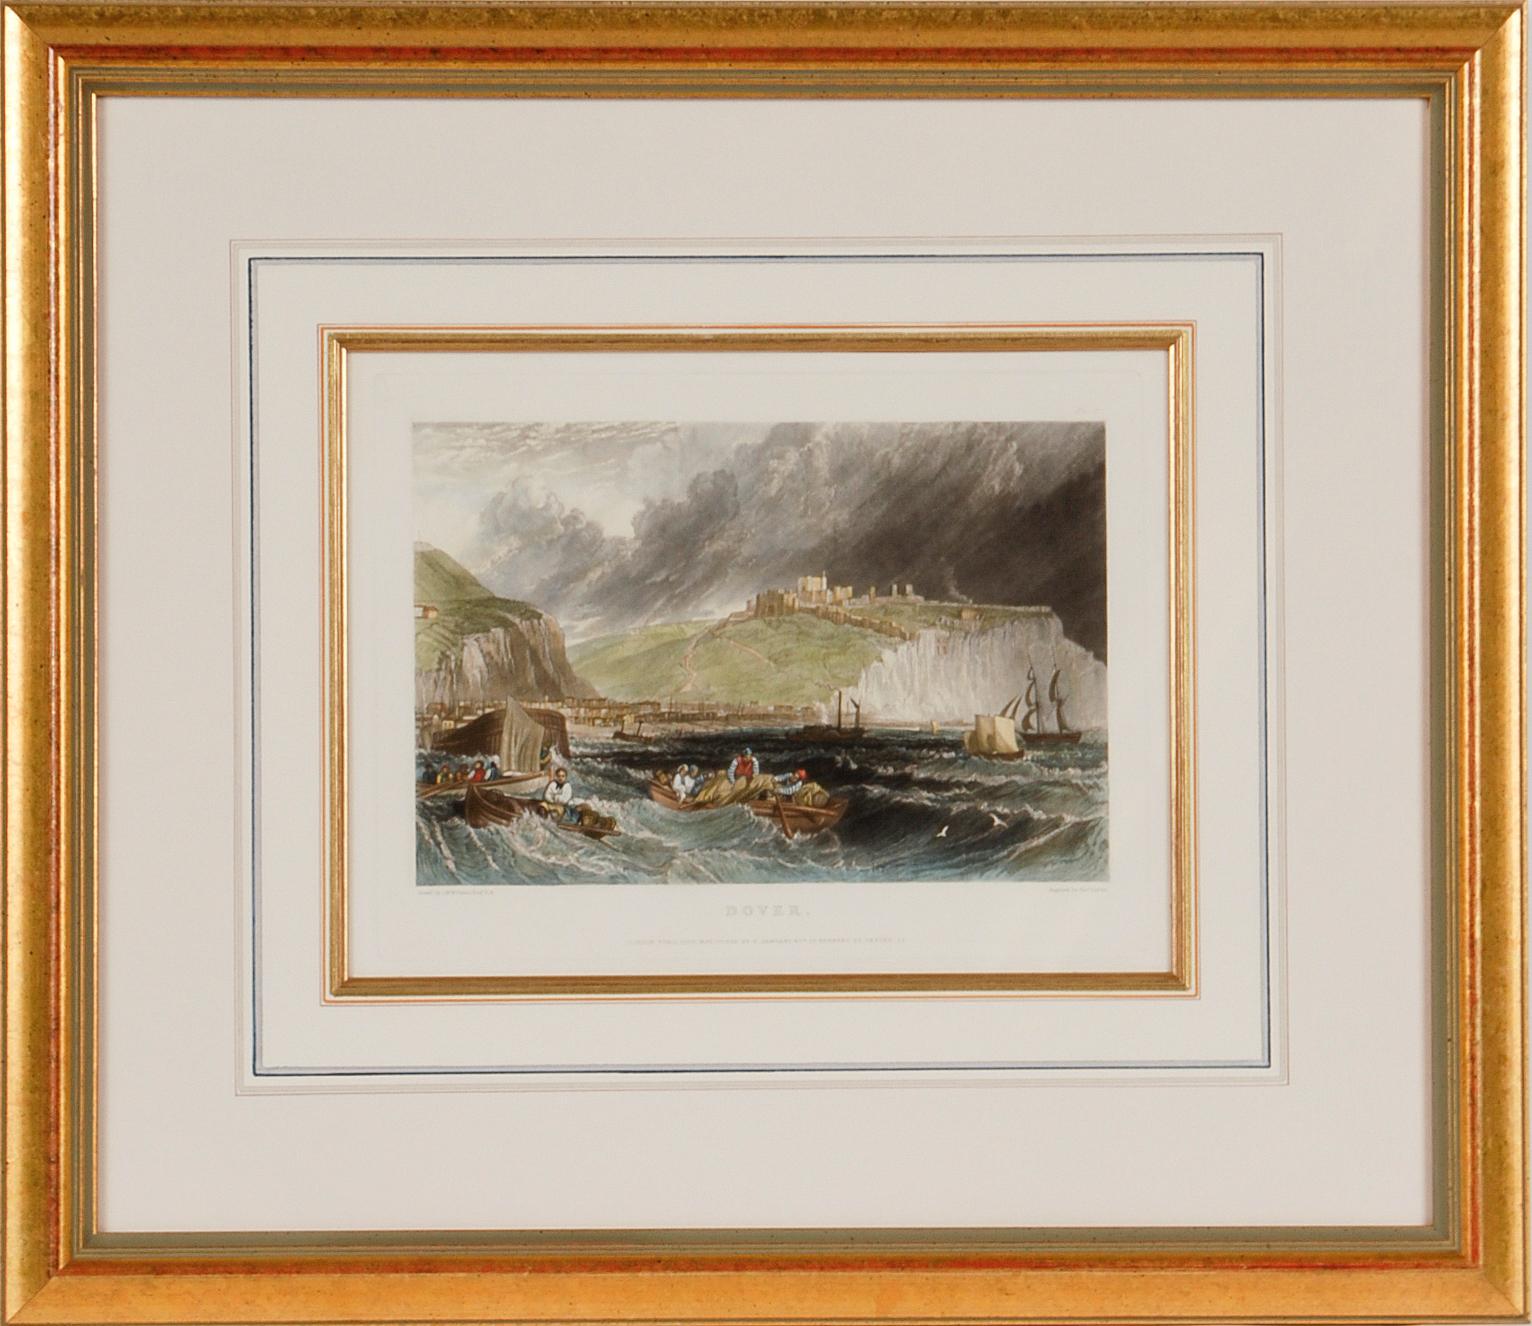 J.M.W. Turner Landscape Print - A View of Dover, England: A Framed 19th C. Engraving After J. M. W. Turner